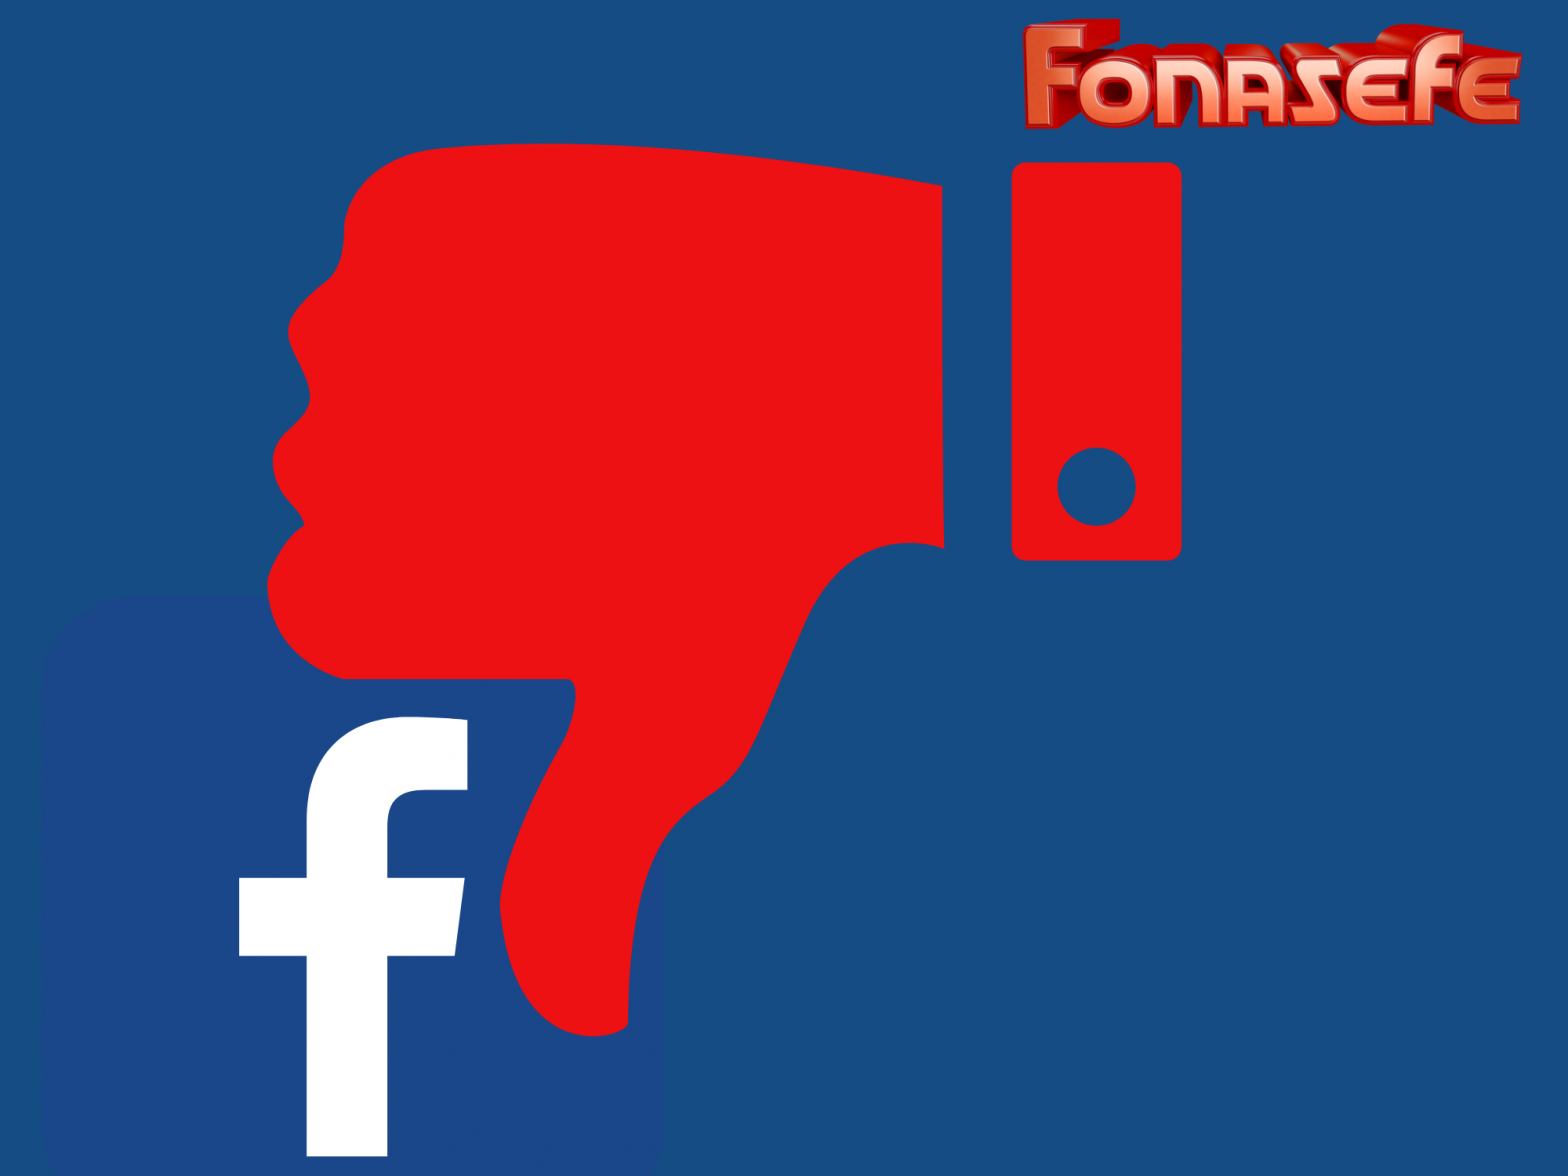 Sisejufe repudia manobra do Facebook para sabotar campanha contra reforma Administrativa, SISEJUFE